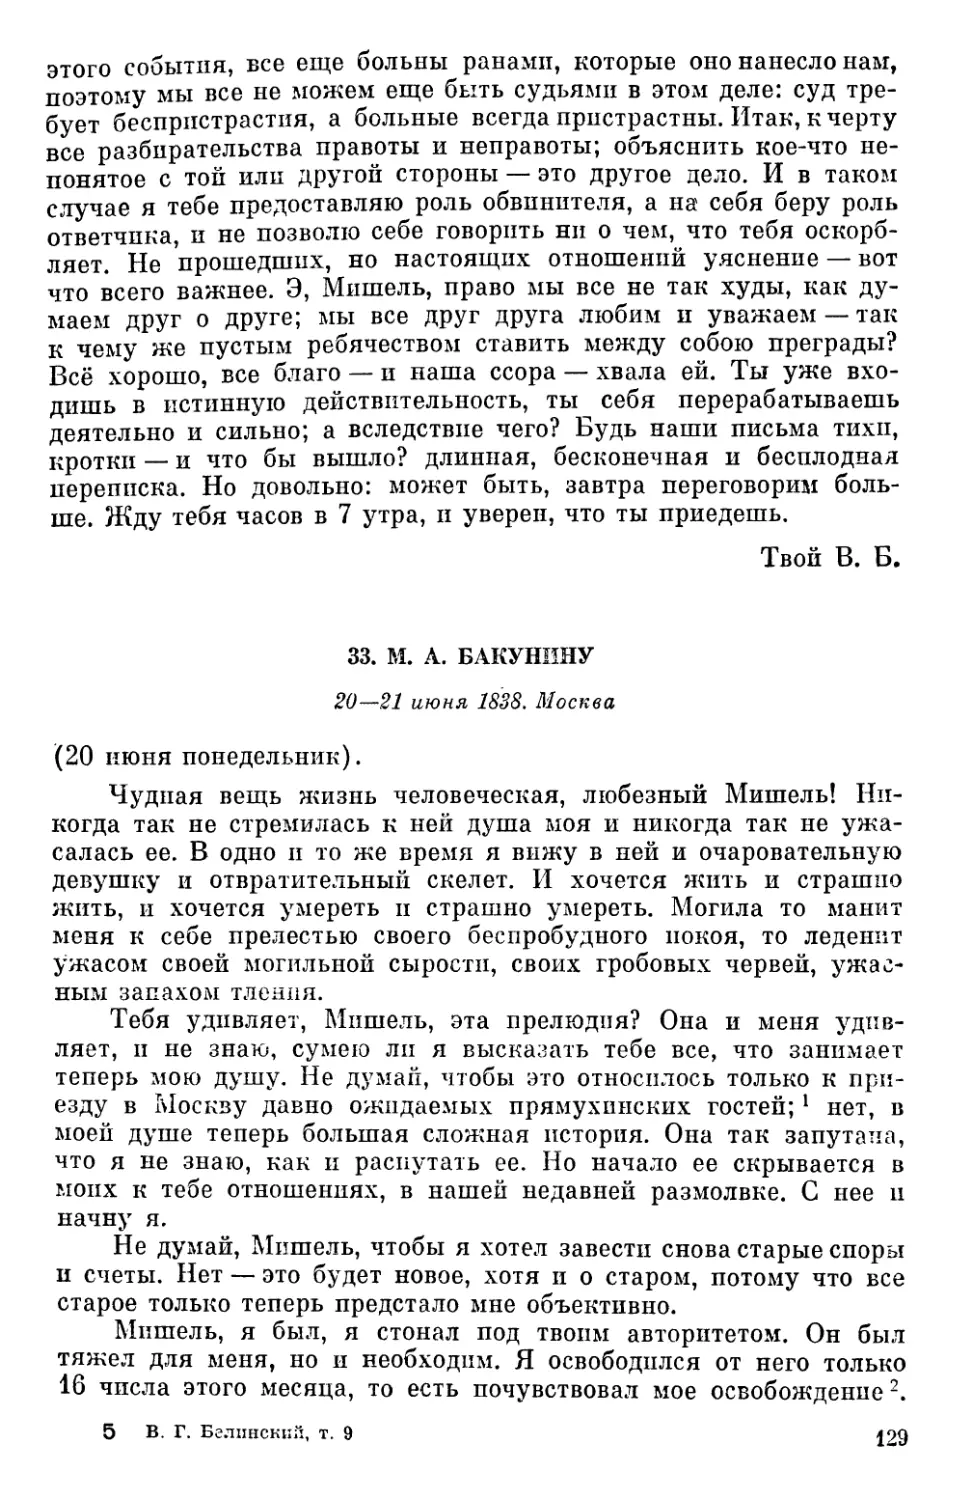 33. М. А. Бакунину. 20—21 июня 1838